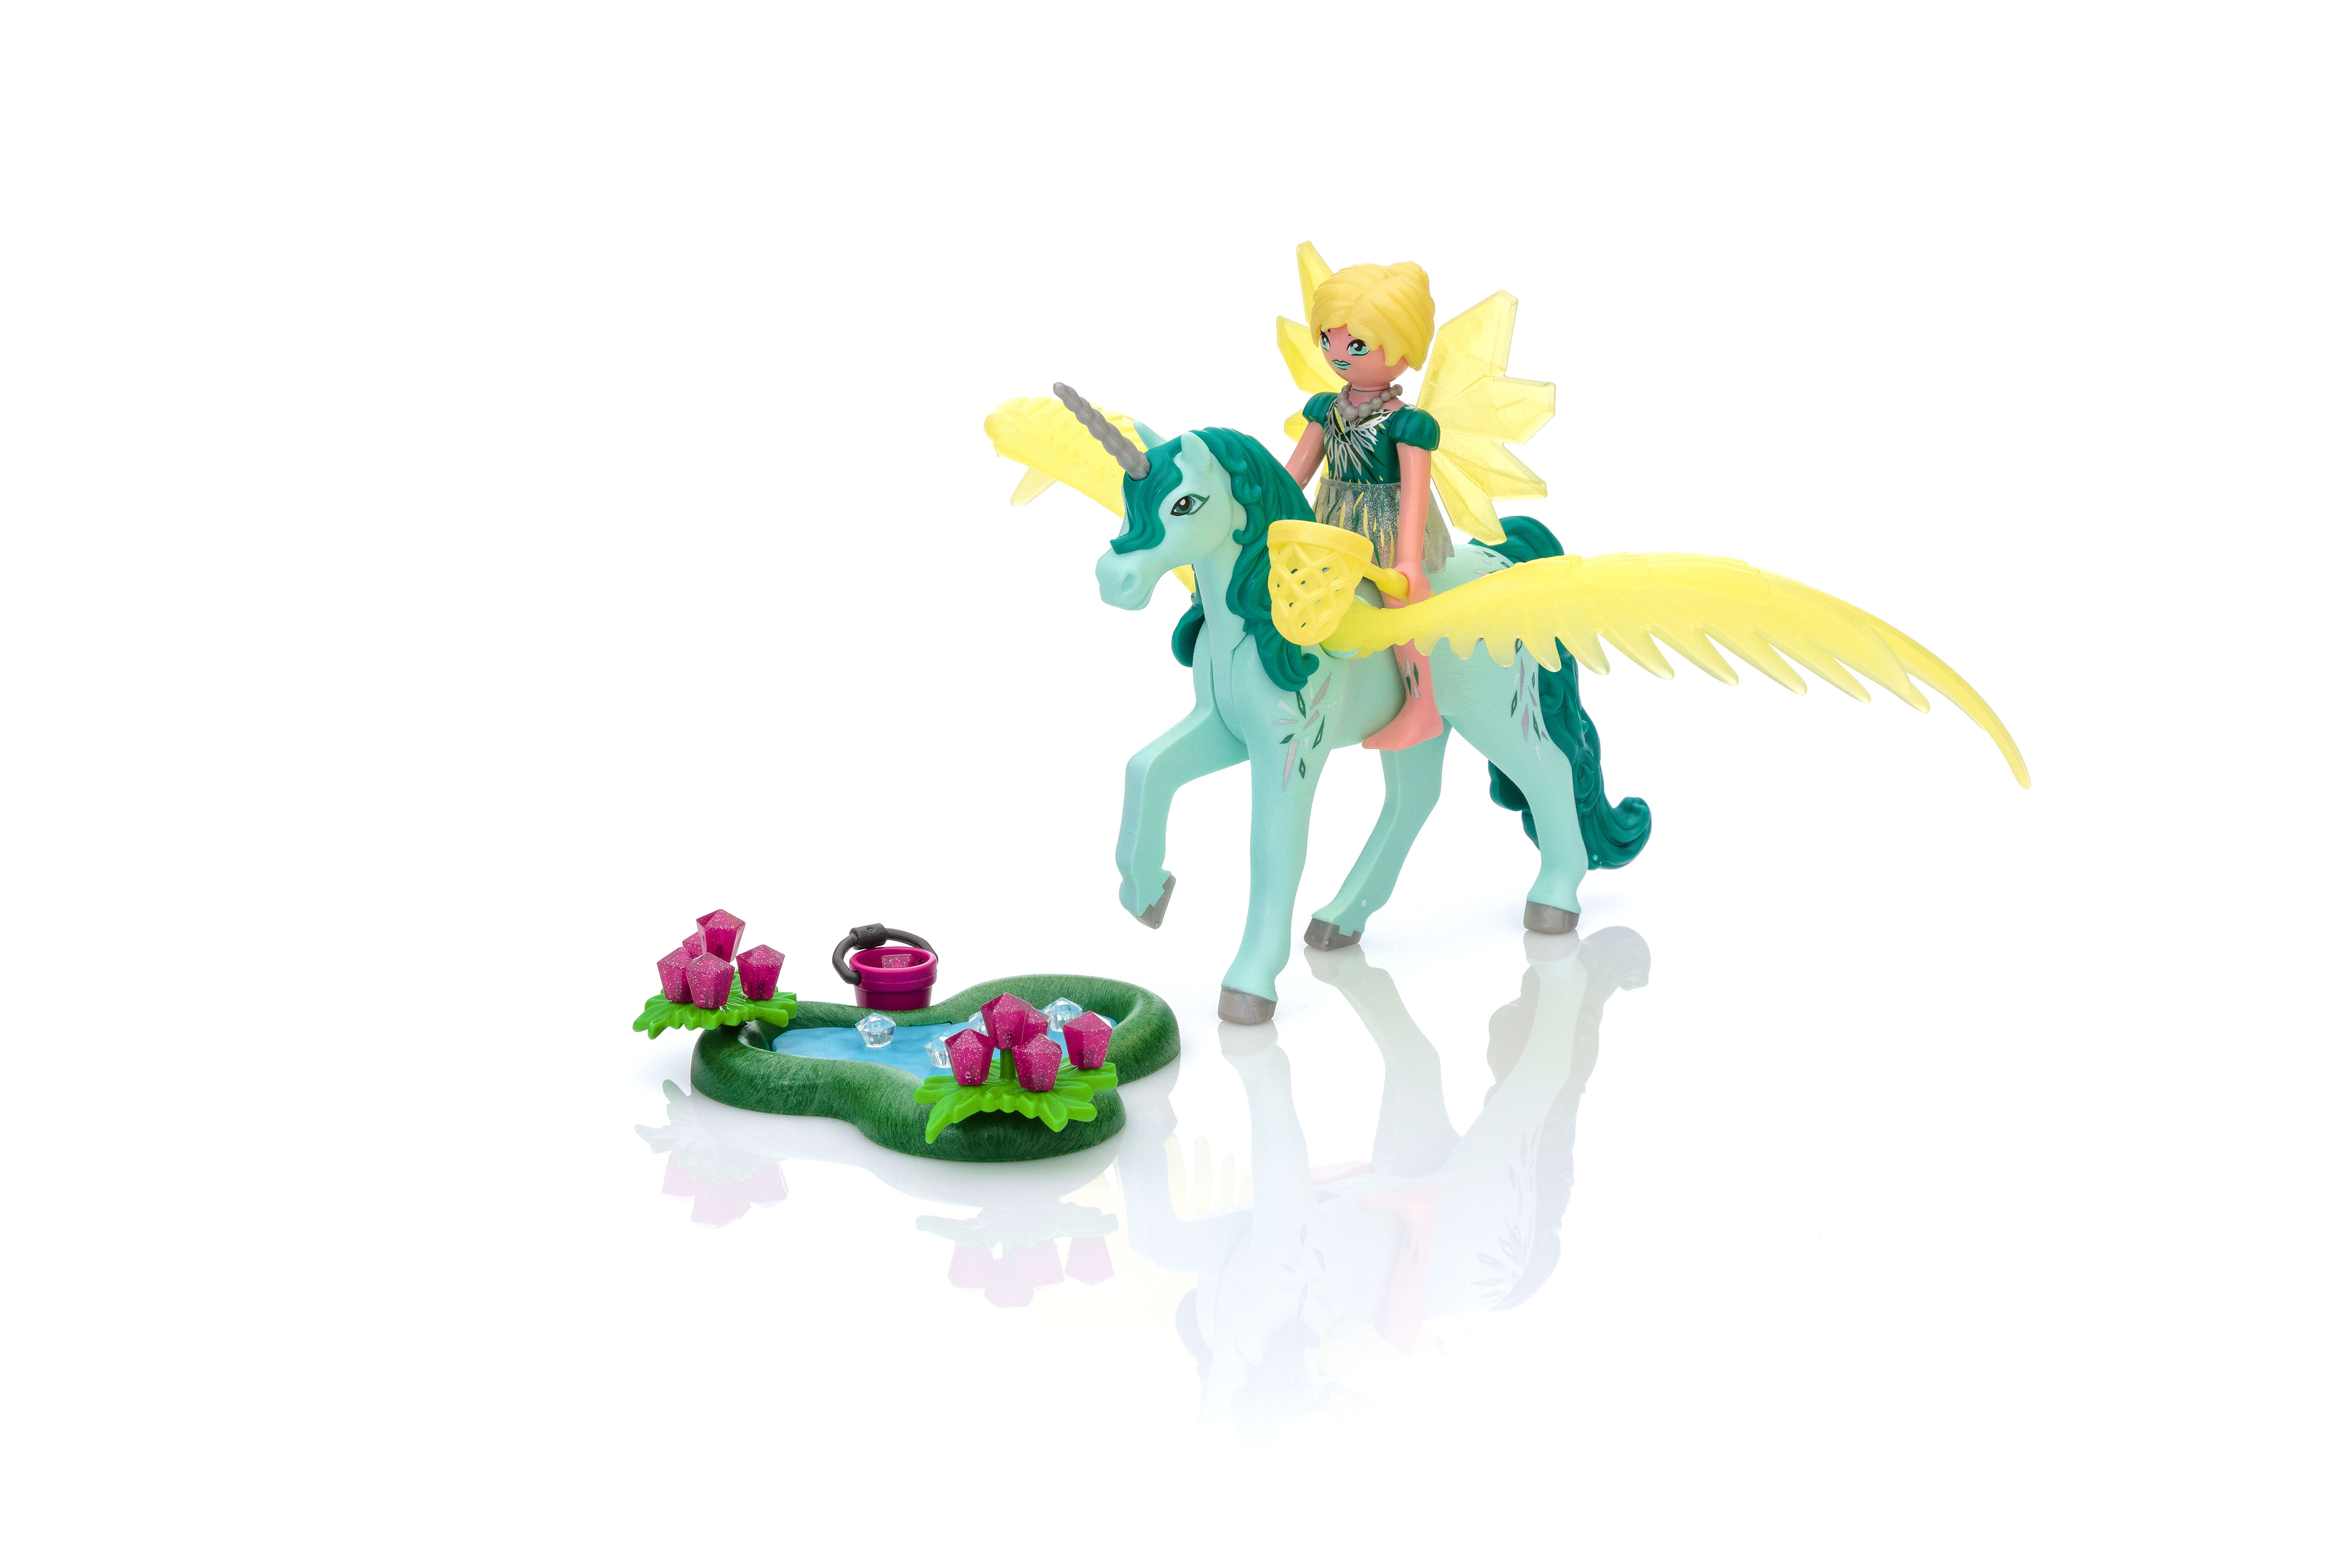 Playmobil 70809 Adventures of Ayuma Crystal Fairy with Unicorn